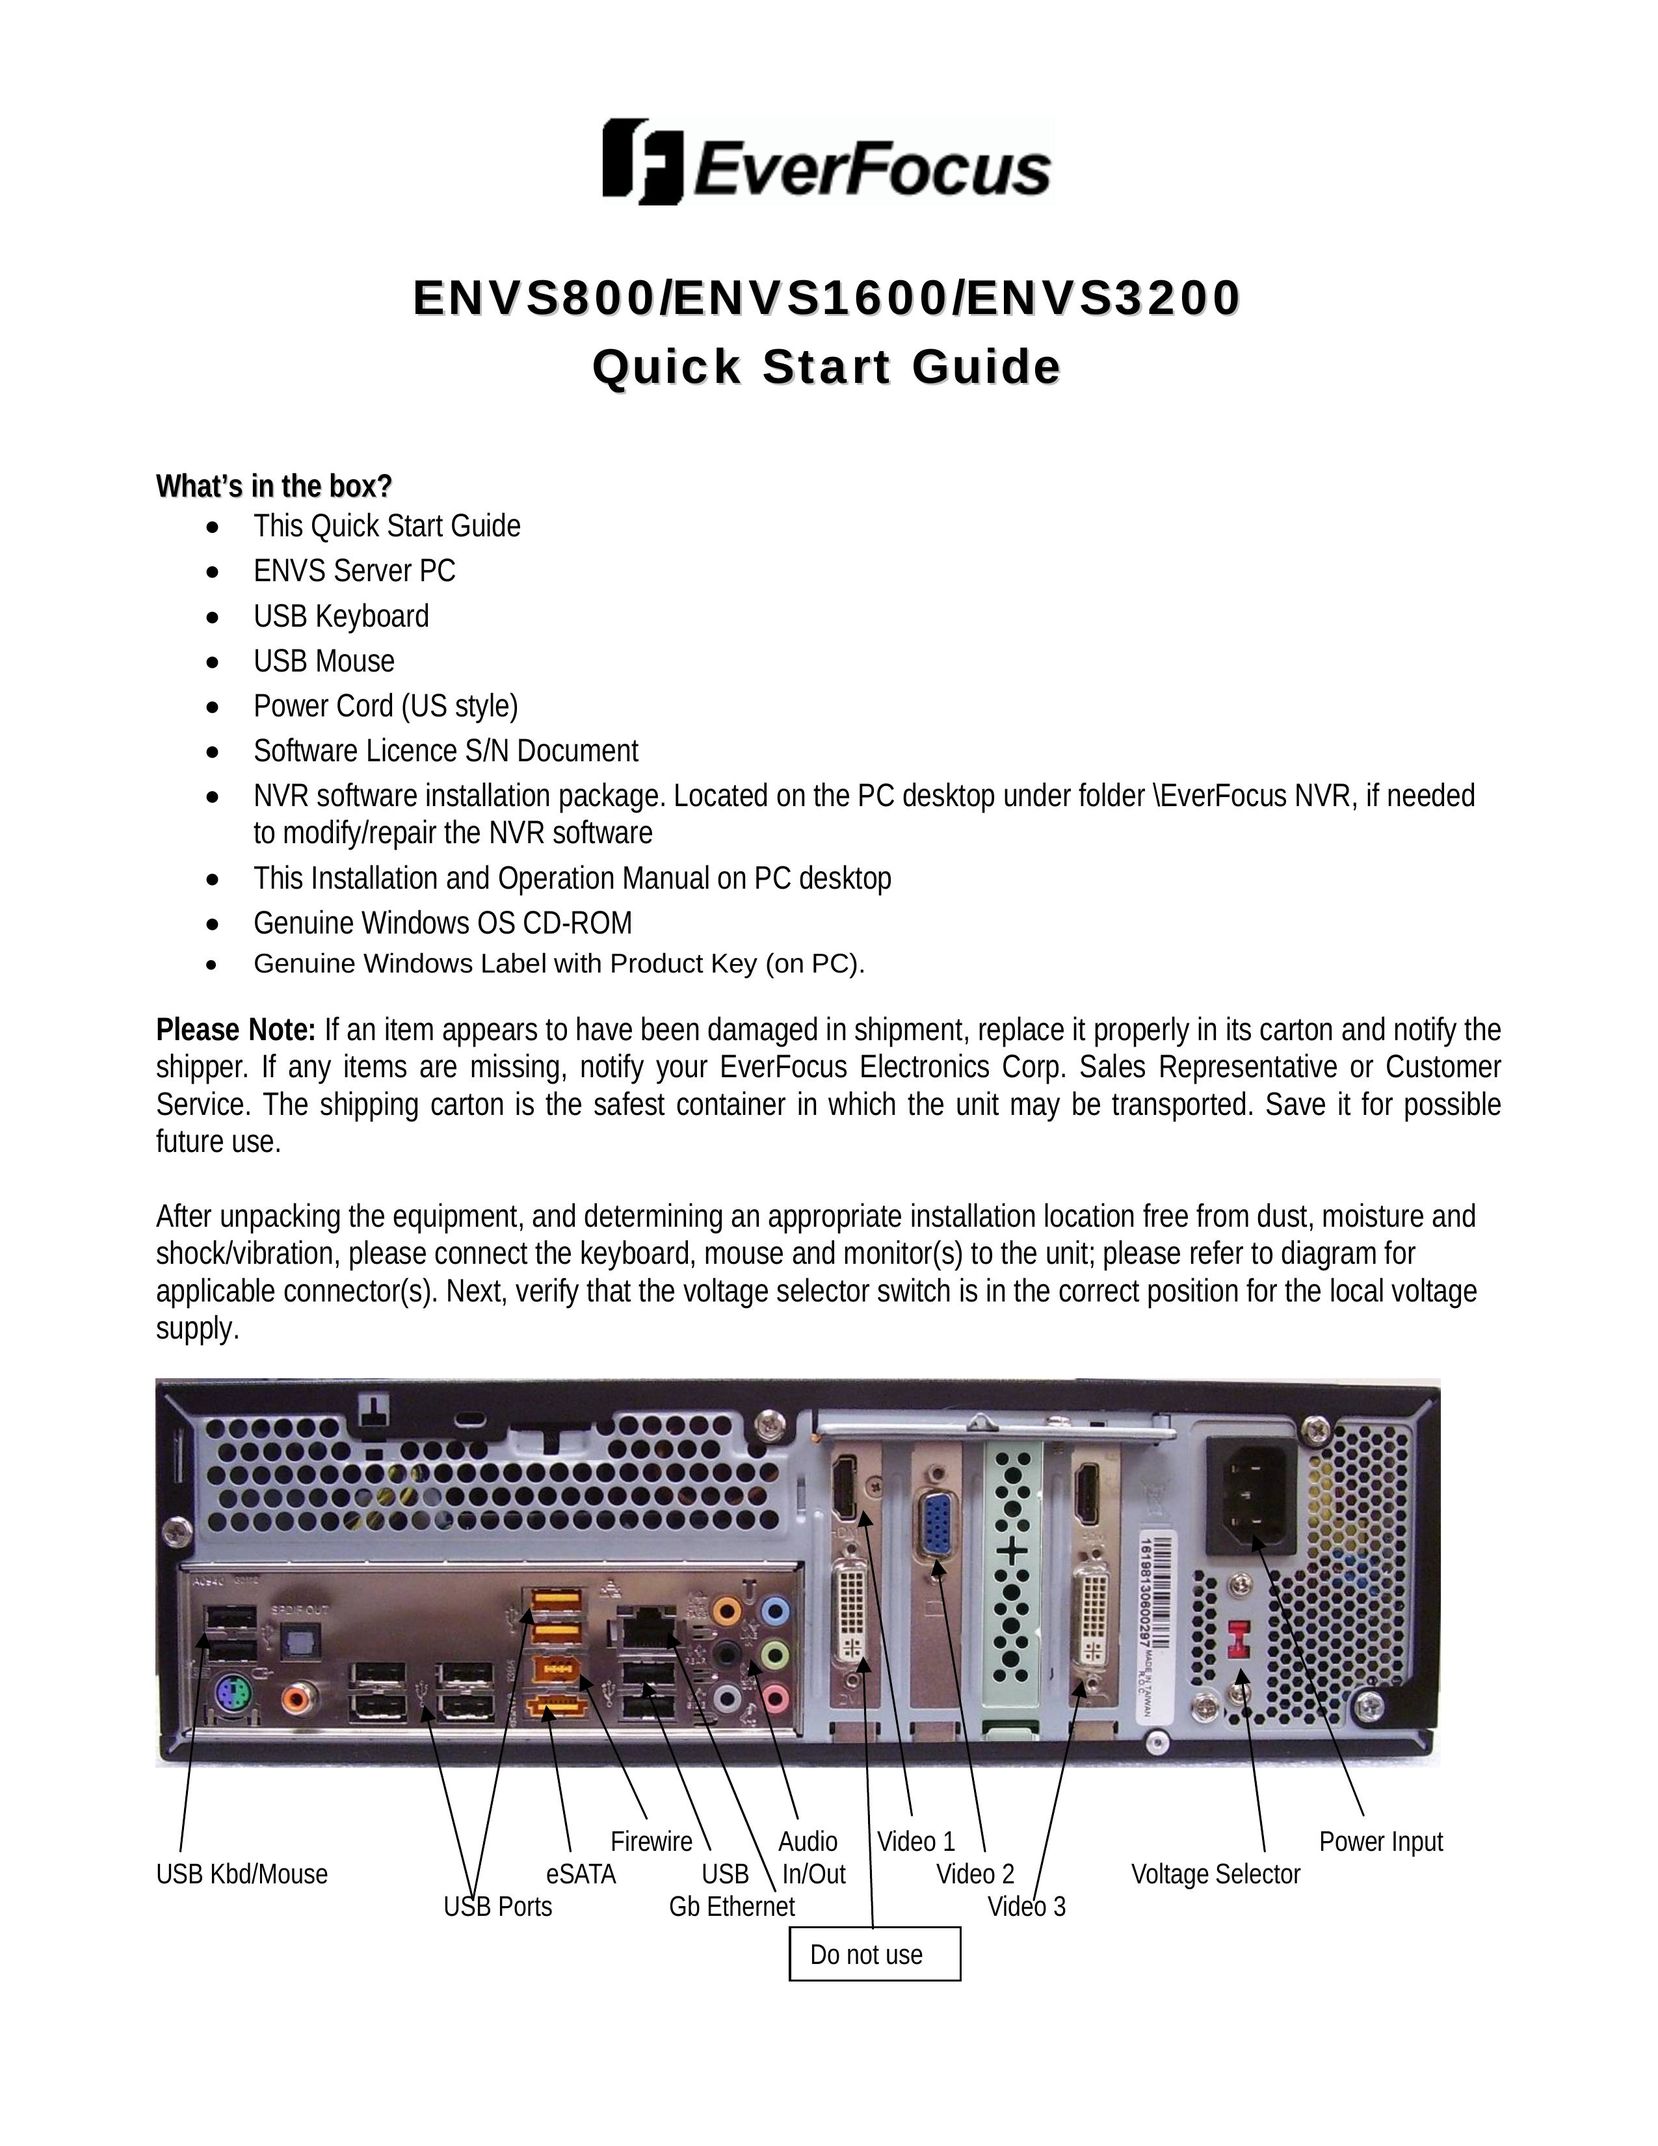 EverFocus ENVS1600 Computer Hardware User Manual